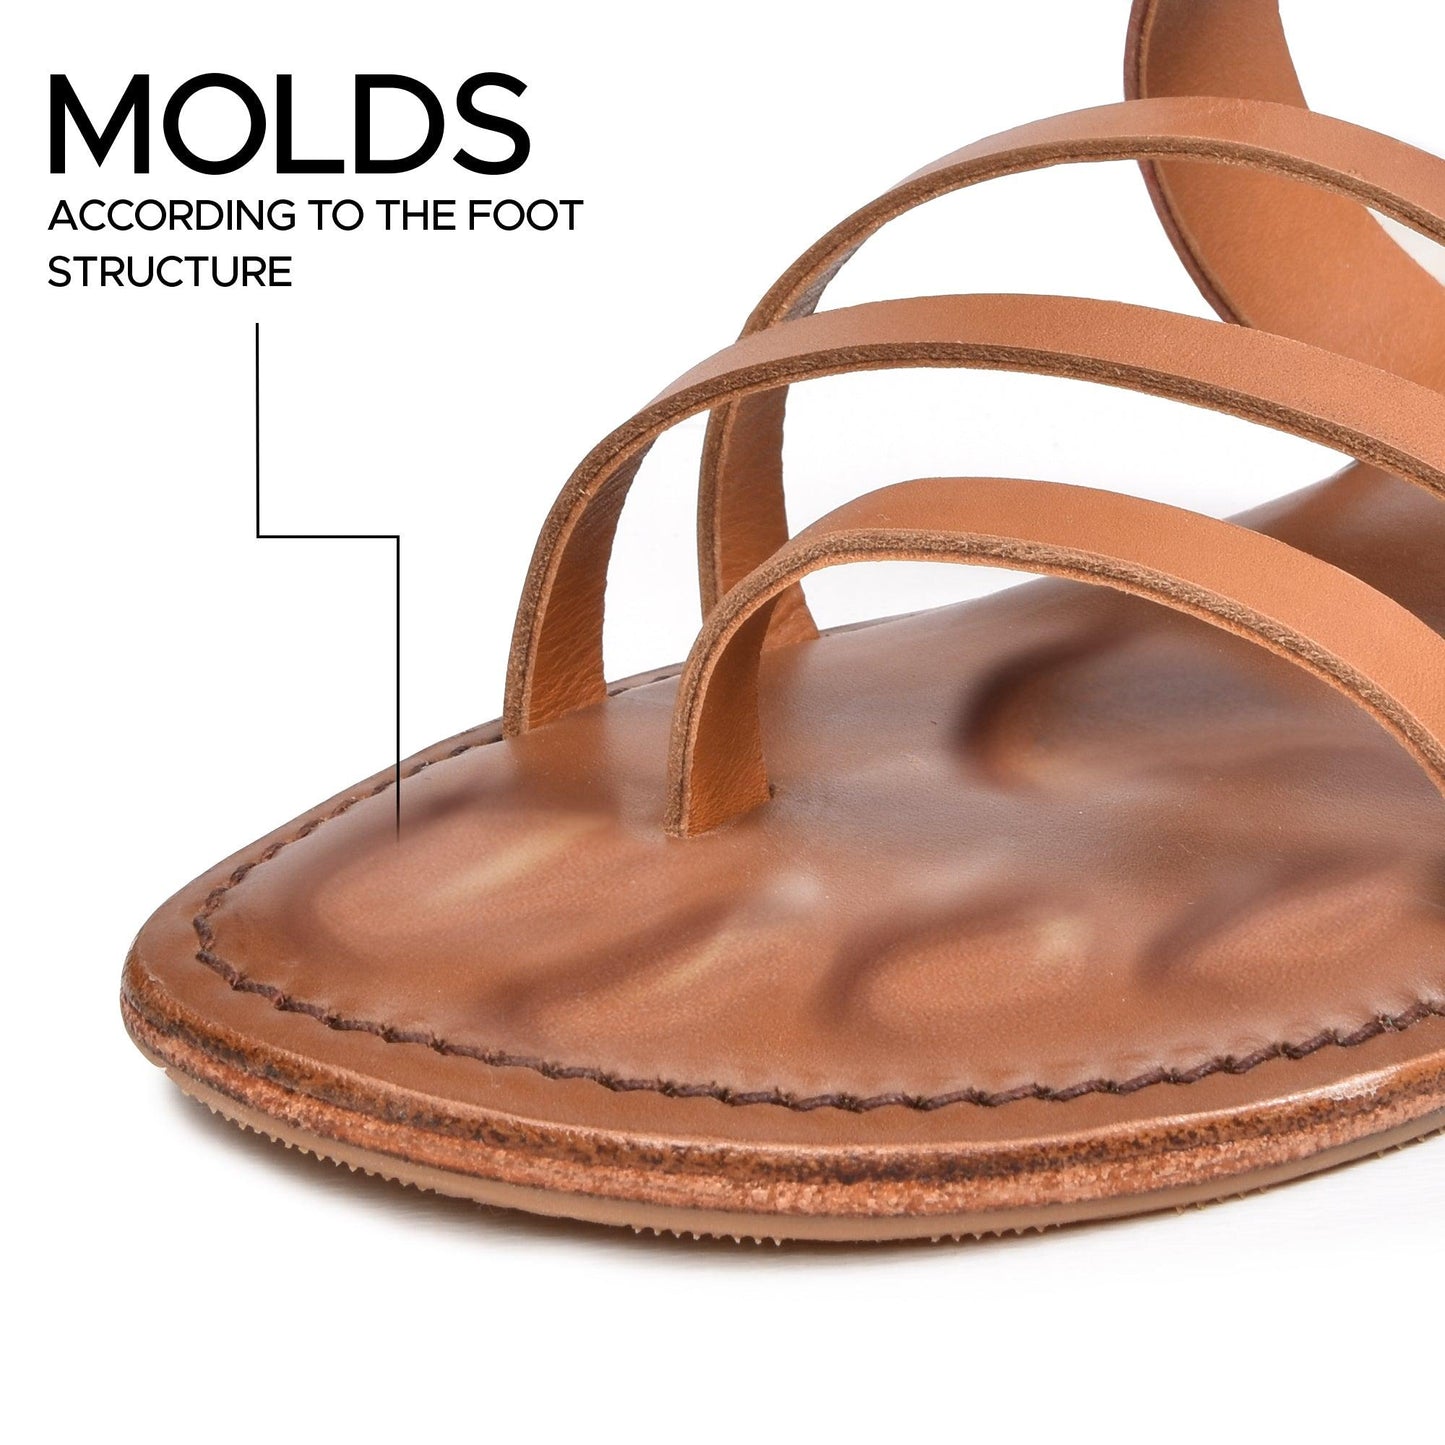 PIORRI by Aerothotic - Demet Women’s Strappy Natural Leather Slides Sandals - LK2106